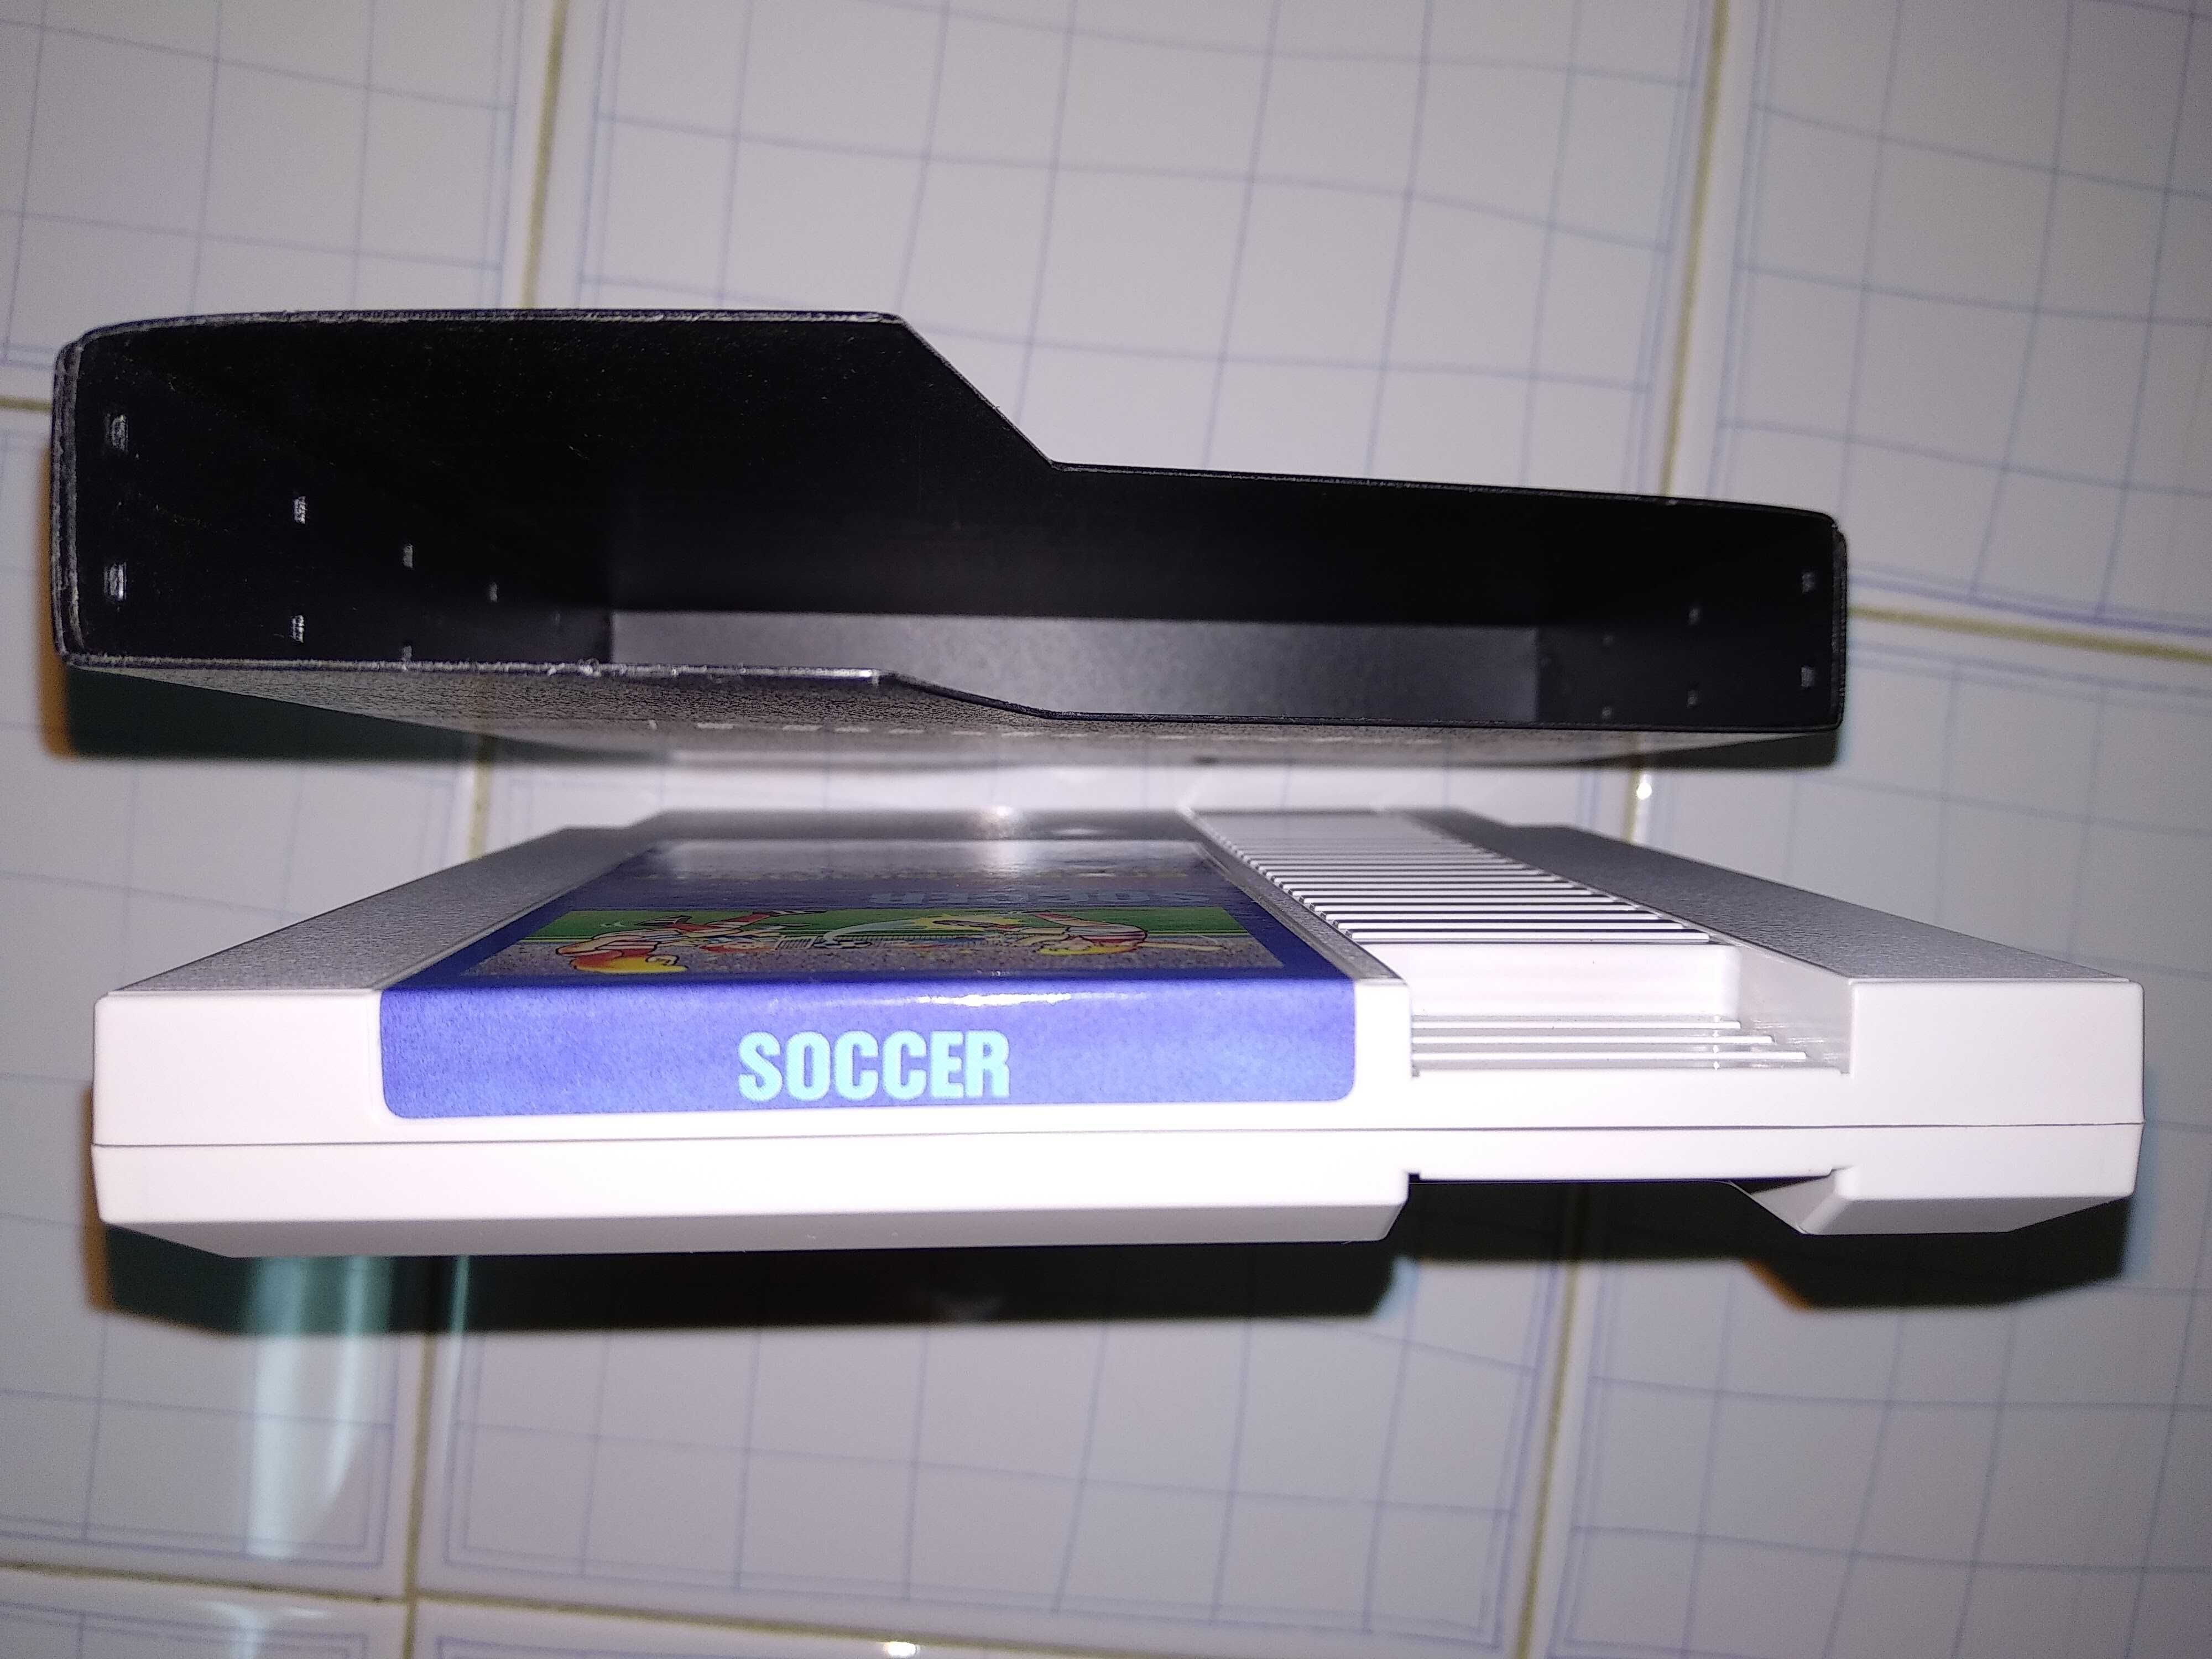 Soccer (NES - Hong Kong Version - Cartridge Cartucho - Nintendo 1985)